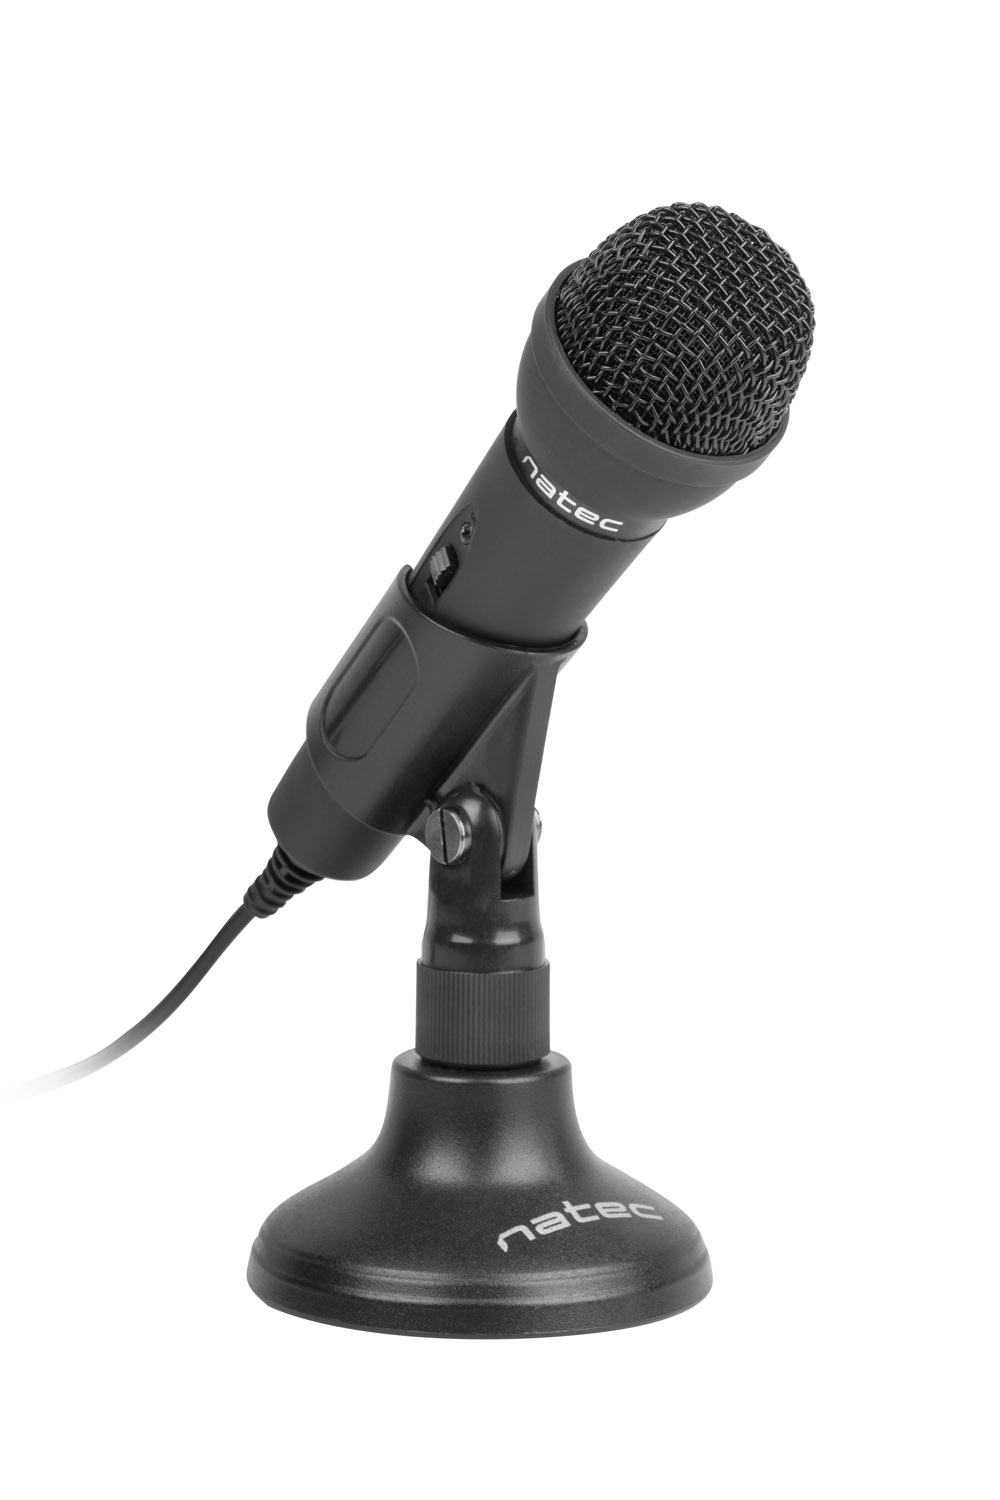 Natec NMI-0776 Microphone Adder Black Mini Jack 3,5mm Low-Noise,omniderctional Microphone